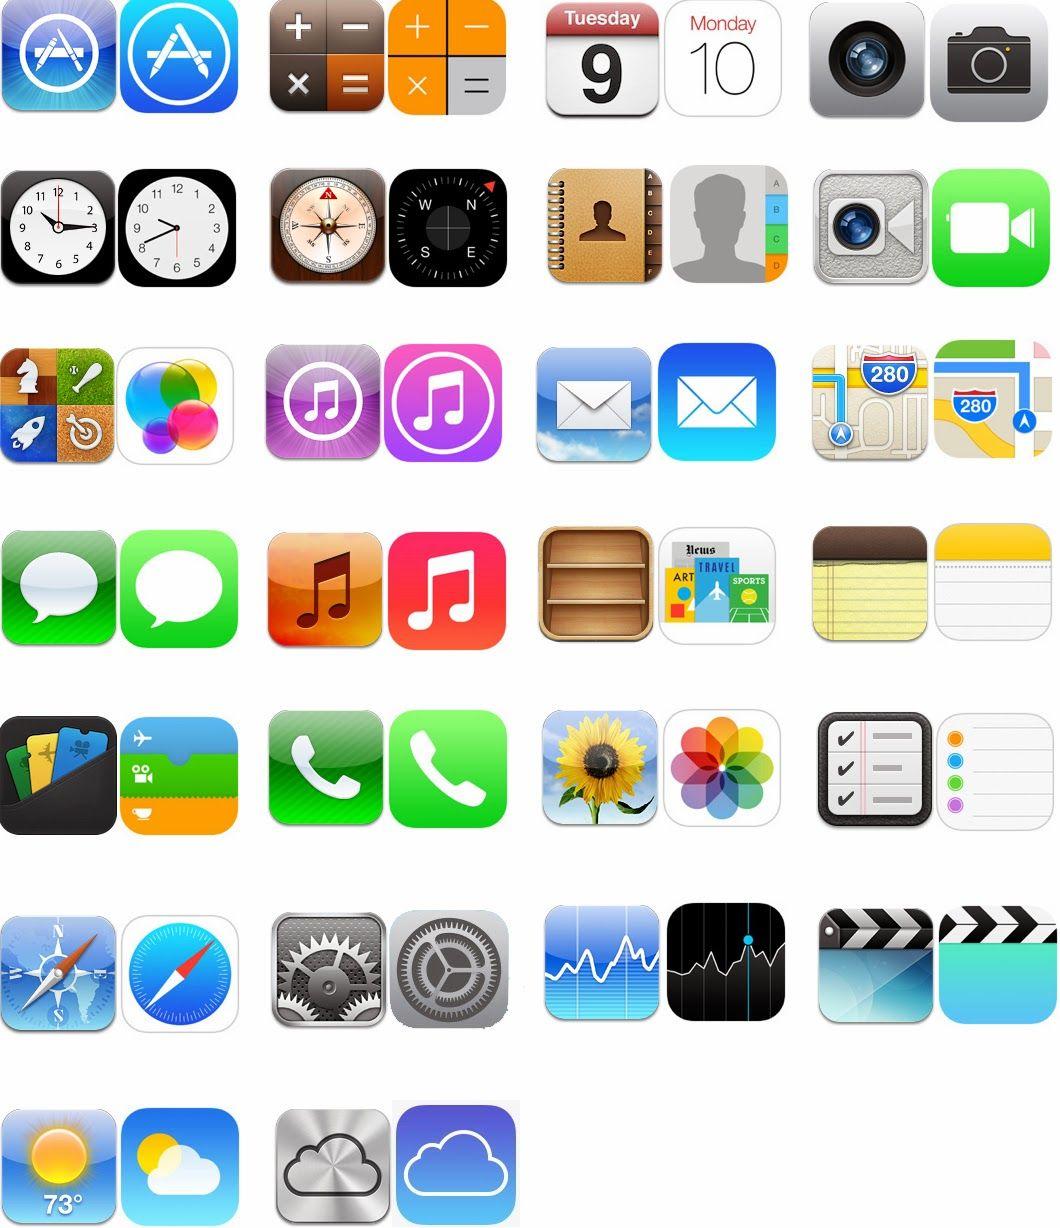 iPad Apps Logo - MUH82 iPad App: Logo design